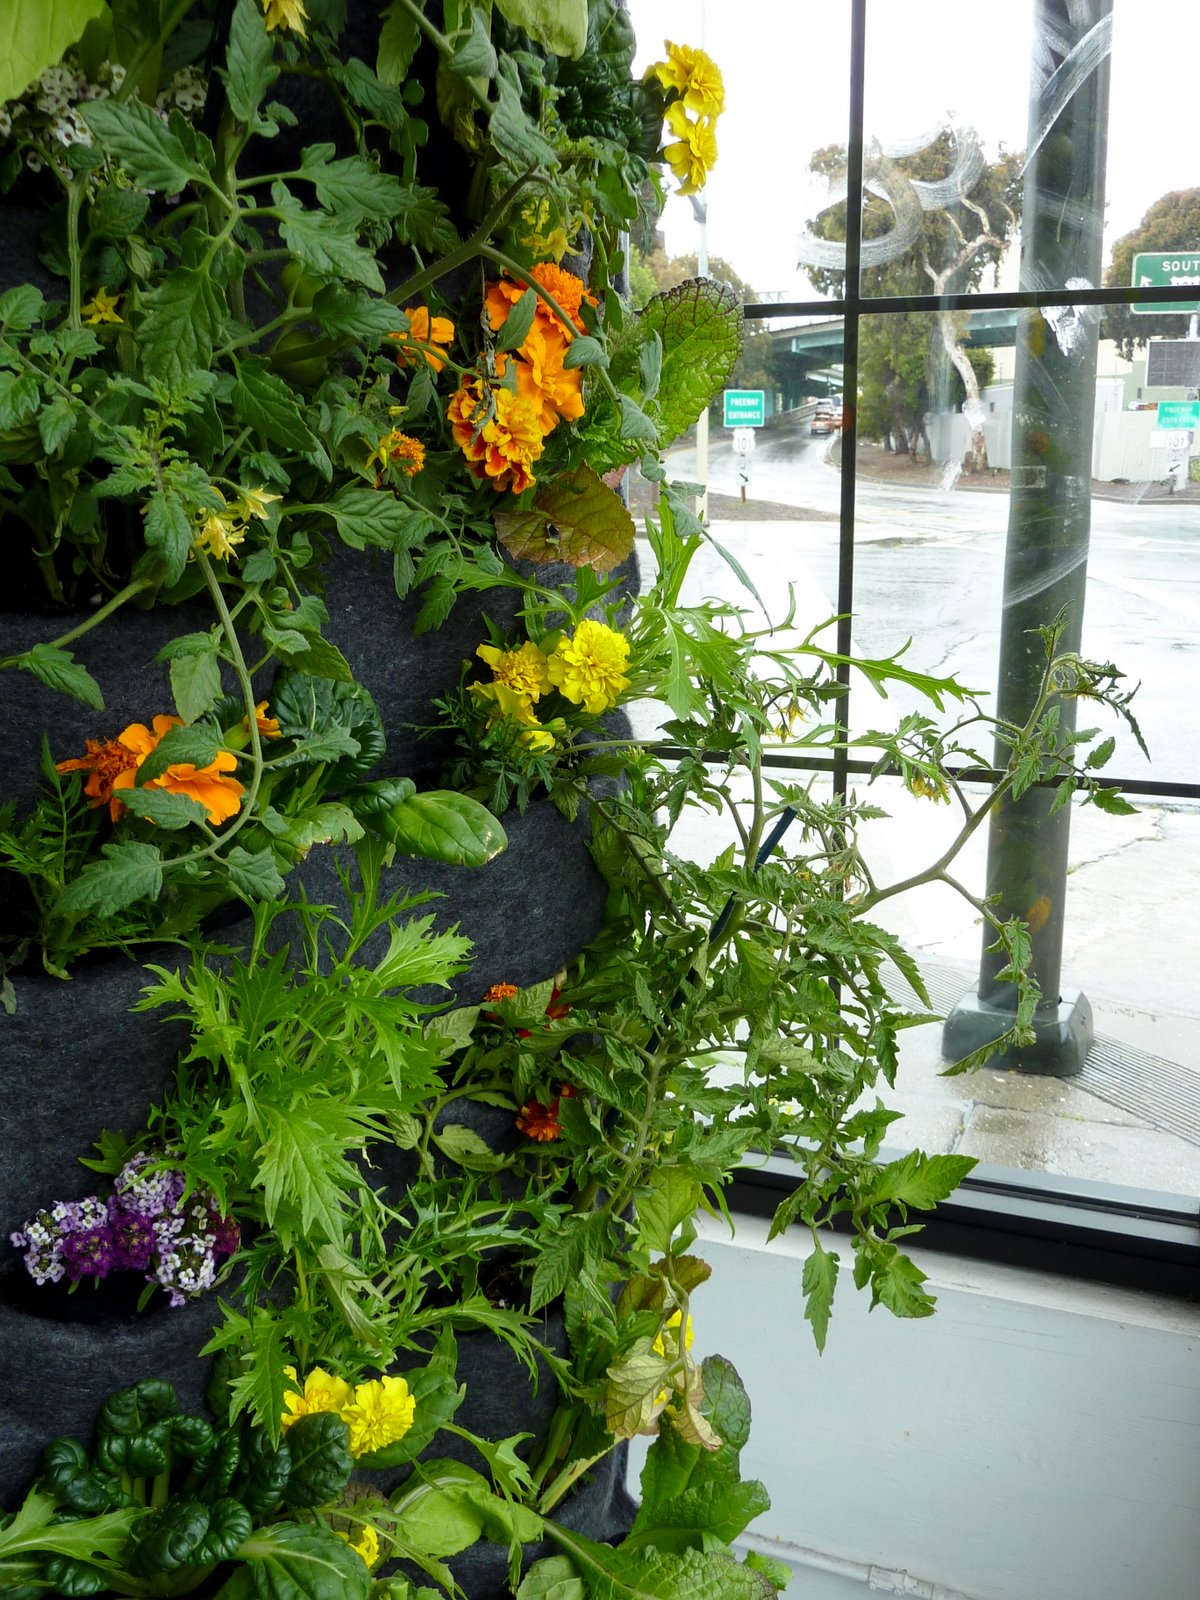 ... On Walls vertical garden systems: Aquaponic Vertical Vegetable Garden